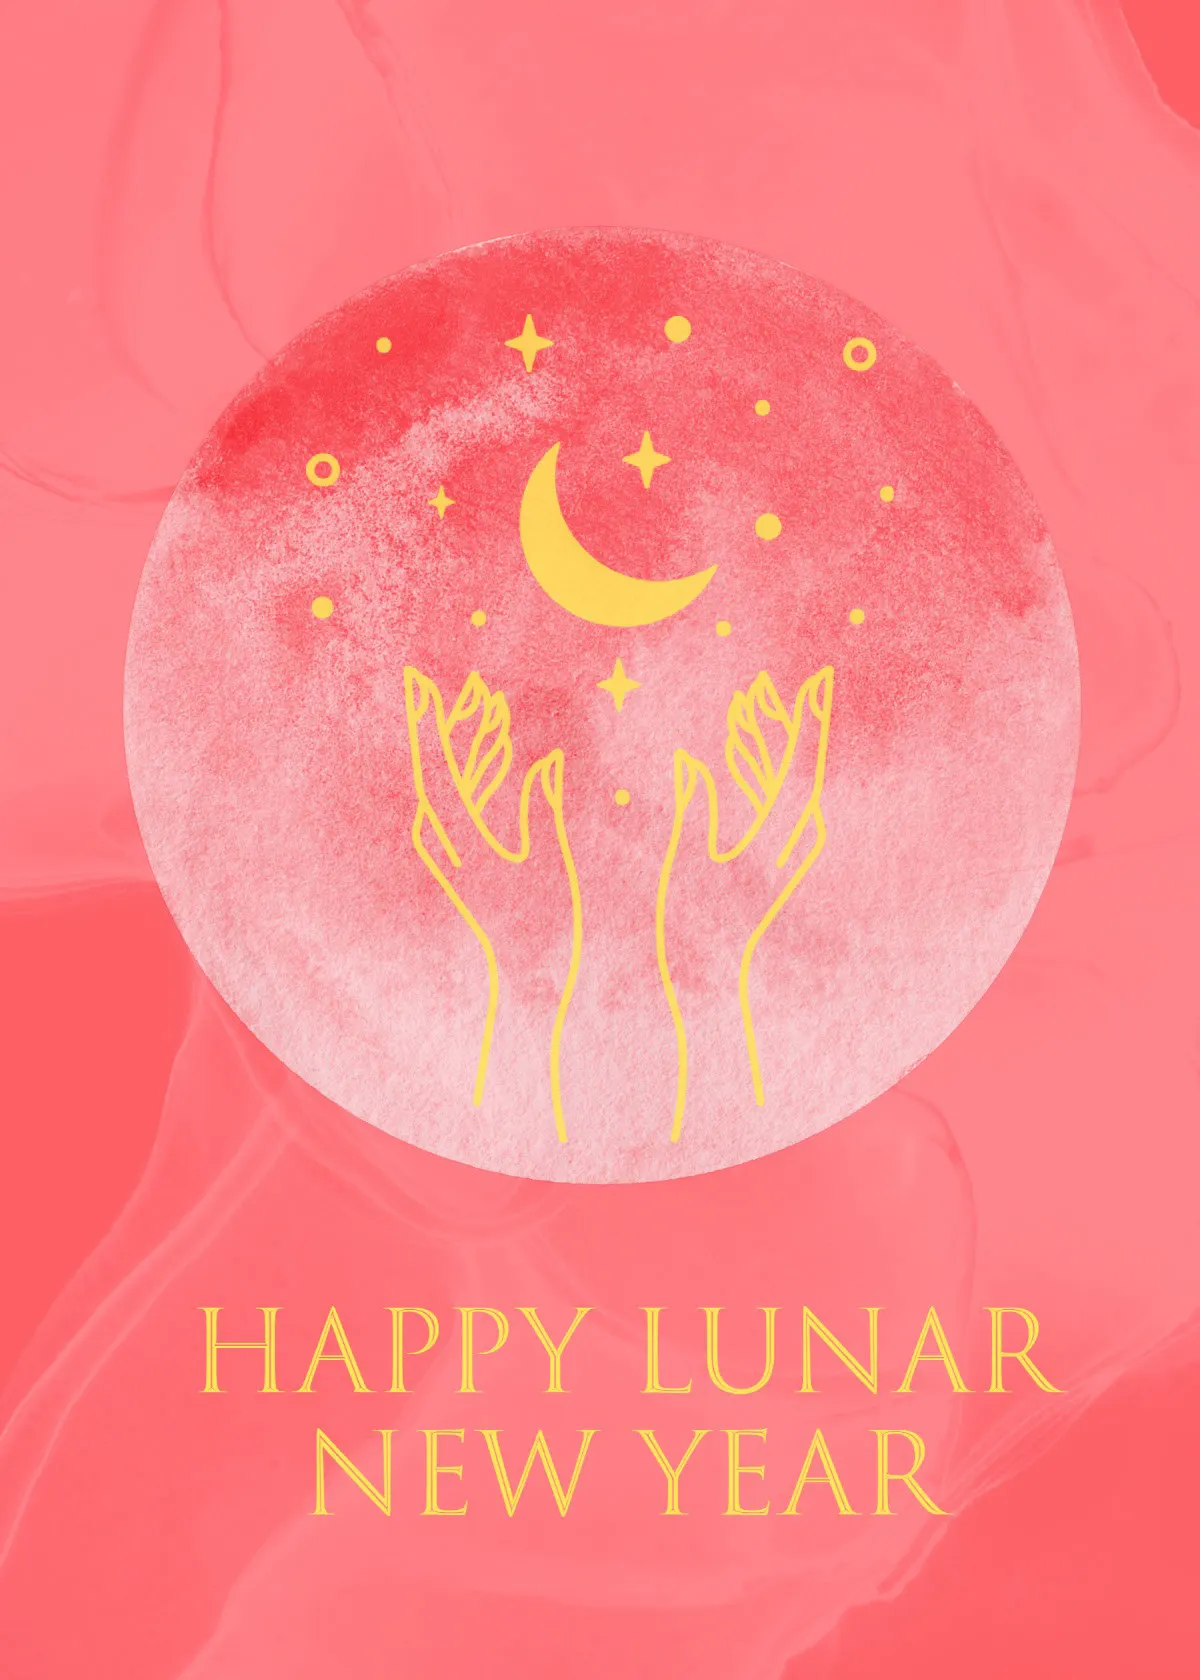 Red & Gold Elegant Moon Greeting Card